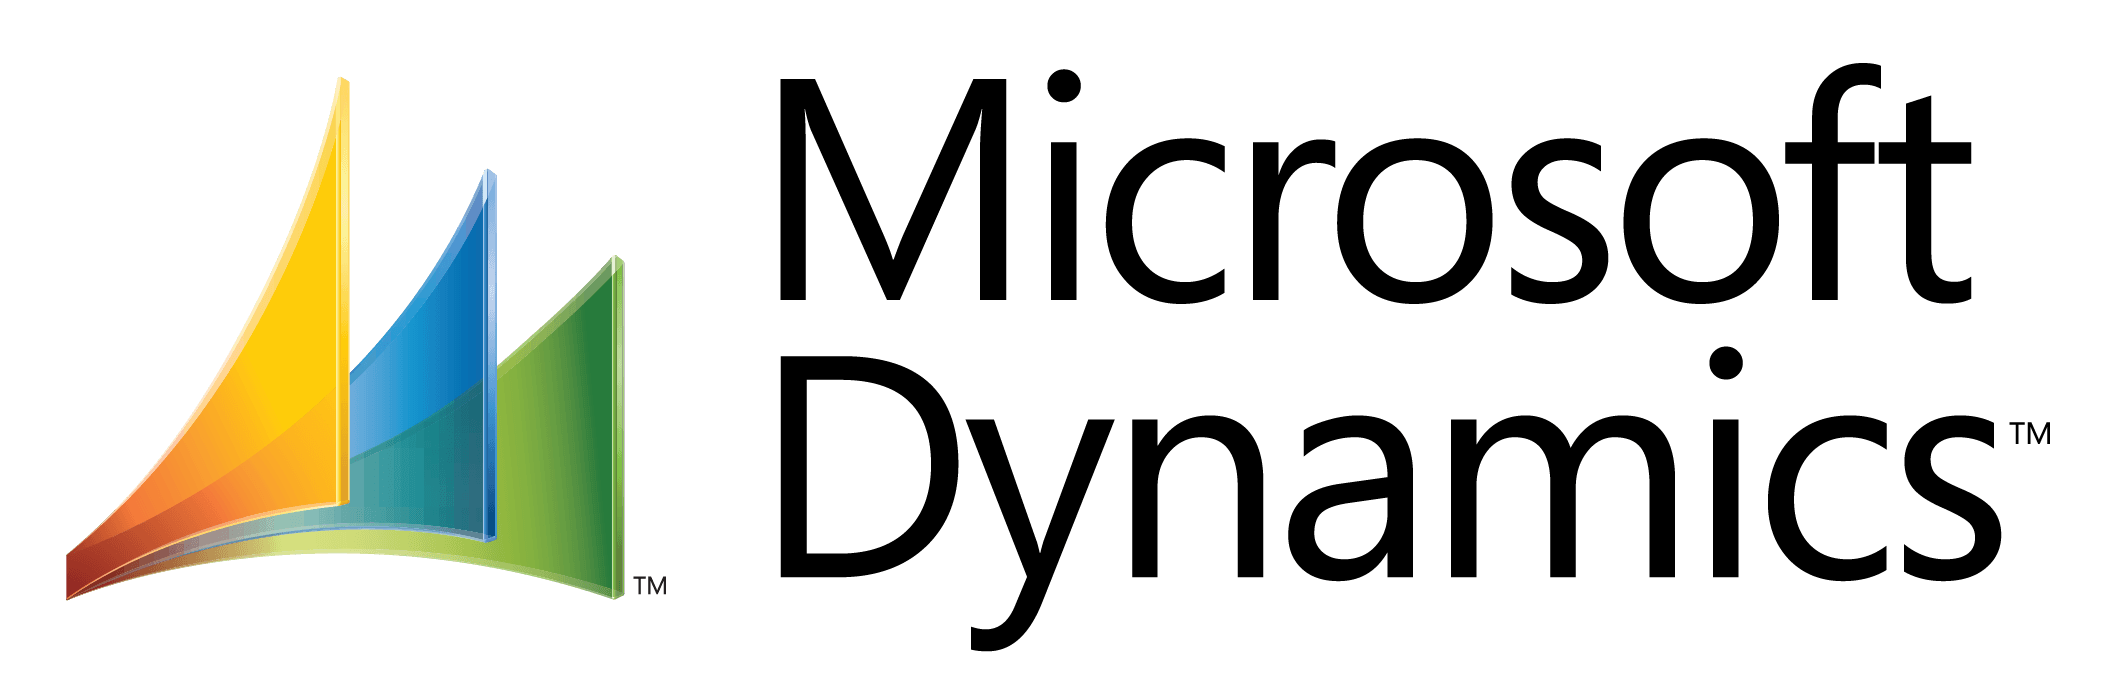 Dynamics CRM Logo - Microsoft Dynamics Crm Transparent Logo Png Images